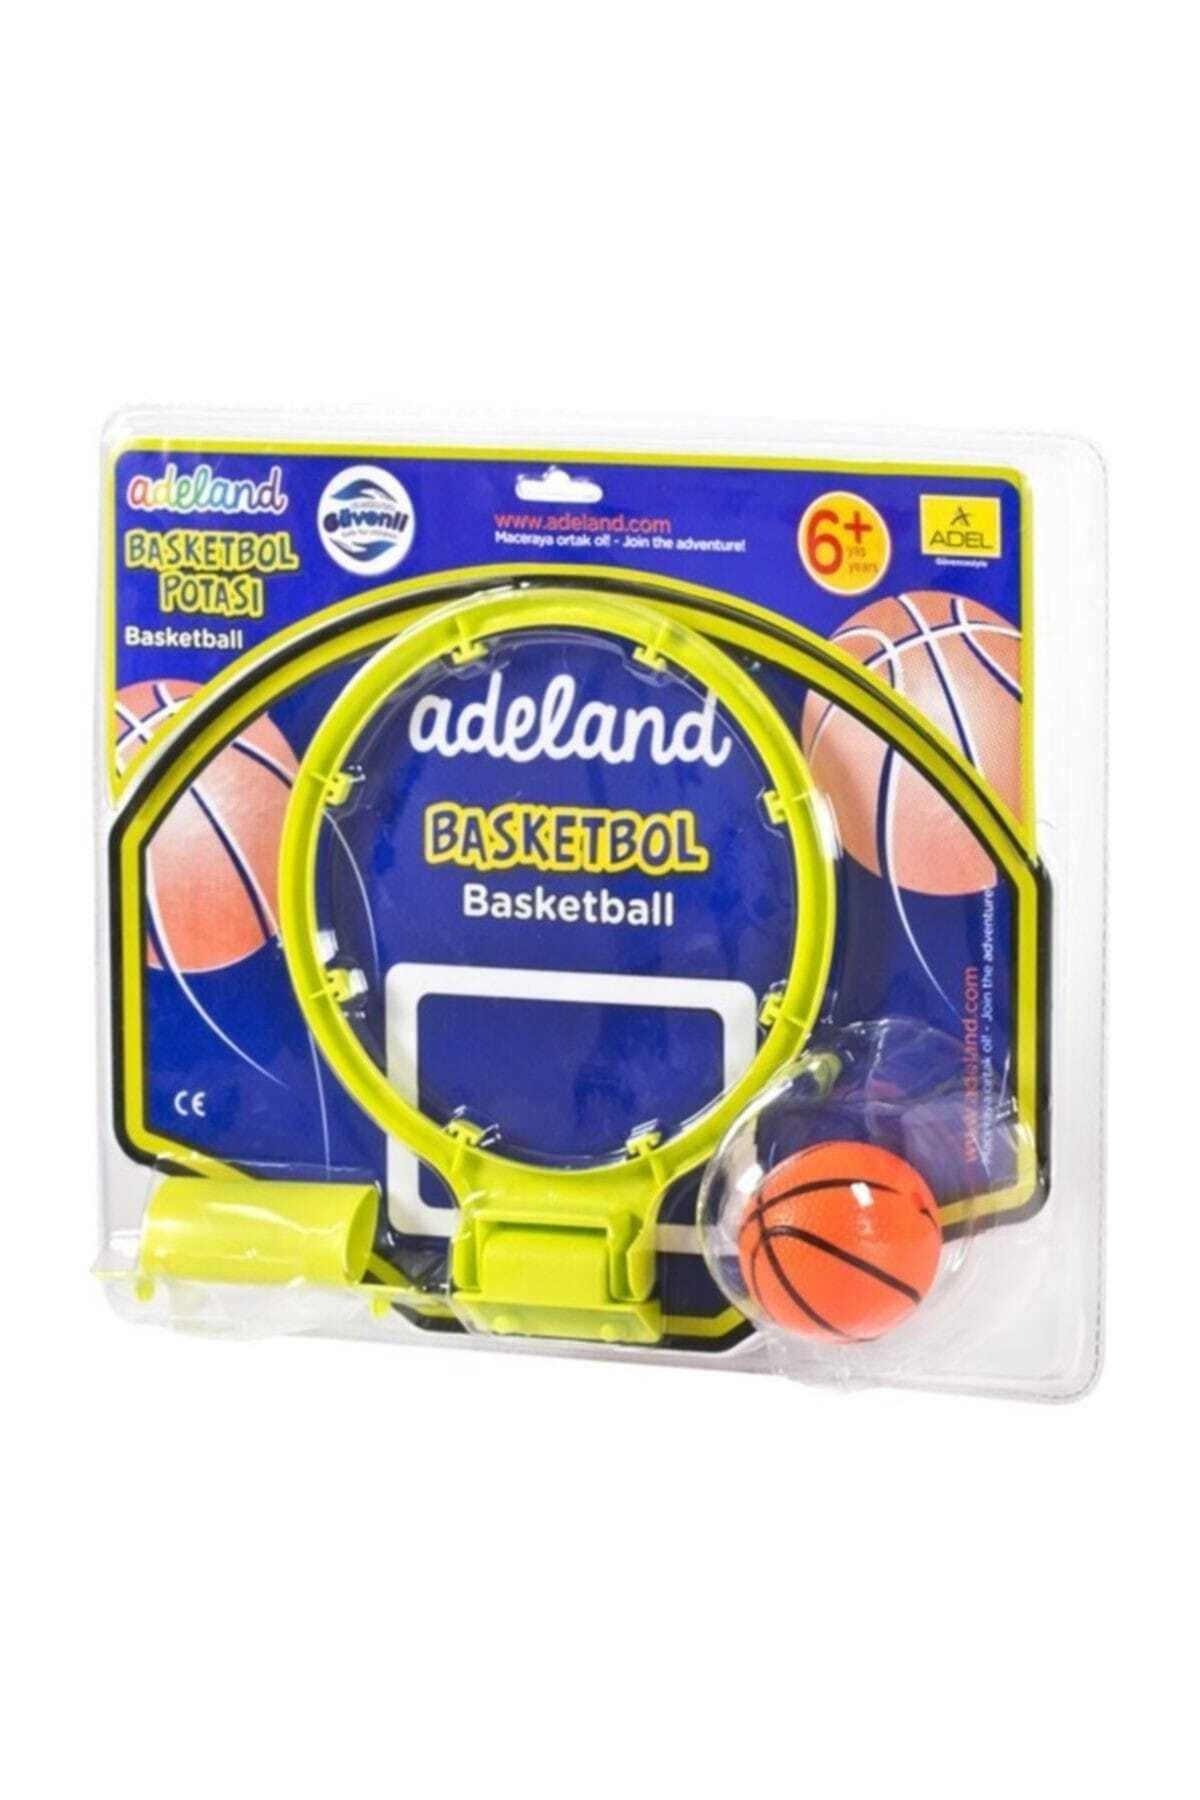 Adel And Basketbol Potası